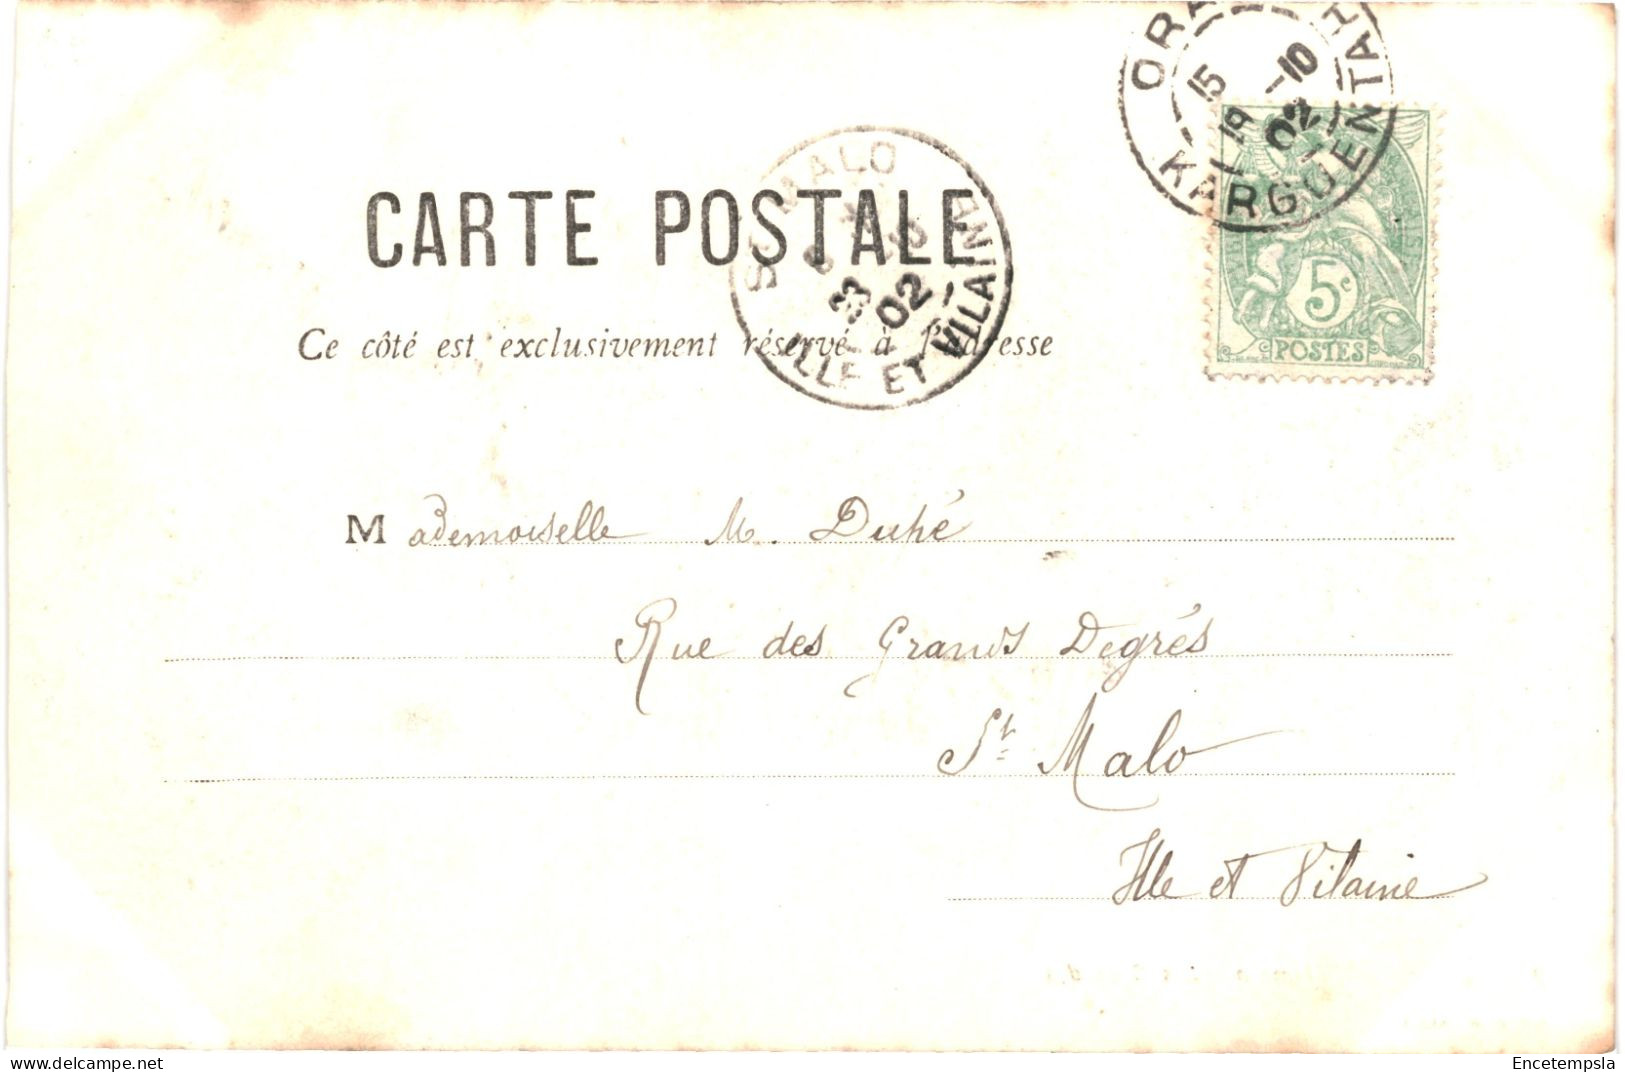 CPA Carte Postale Algérie  Tlemcen  Les Cascades 1902 VM80586 - Tlemcen